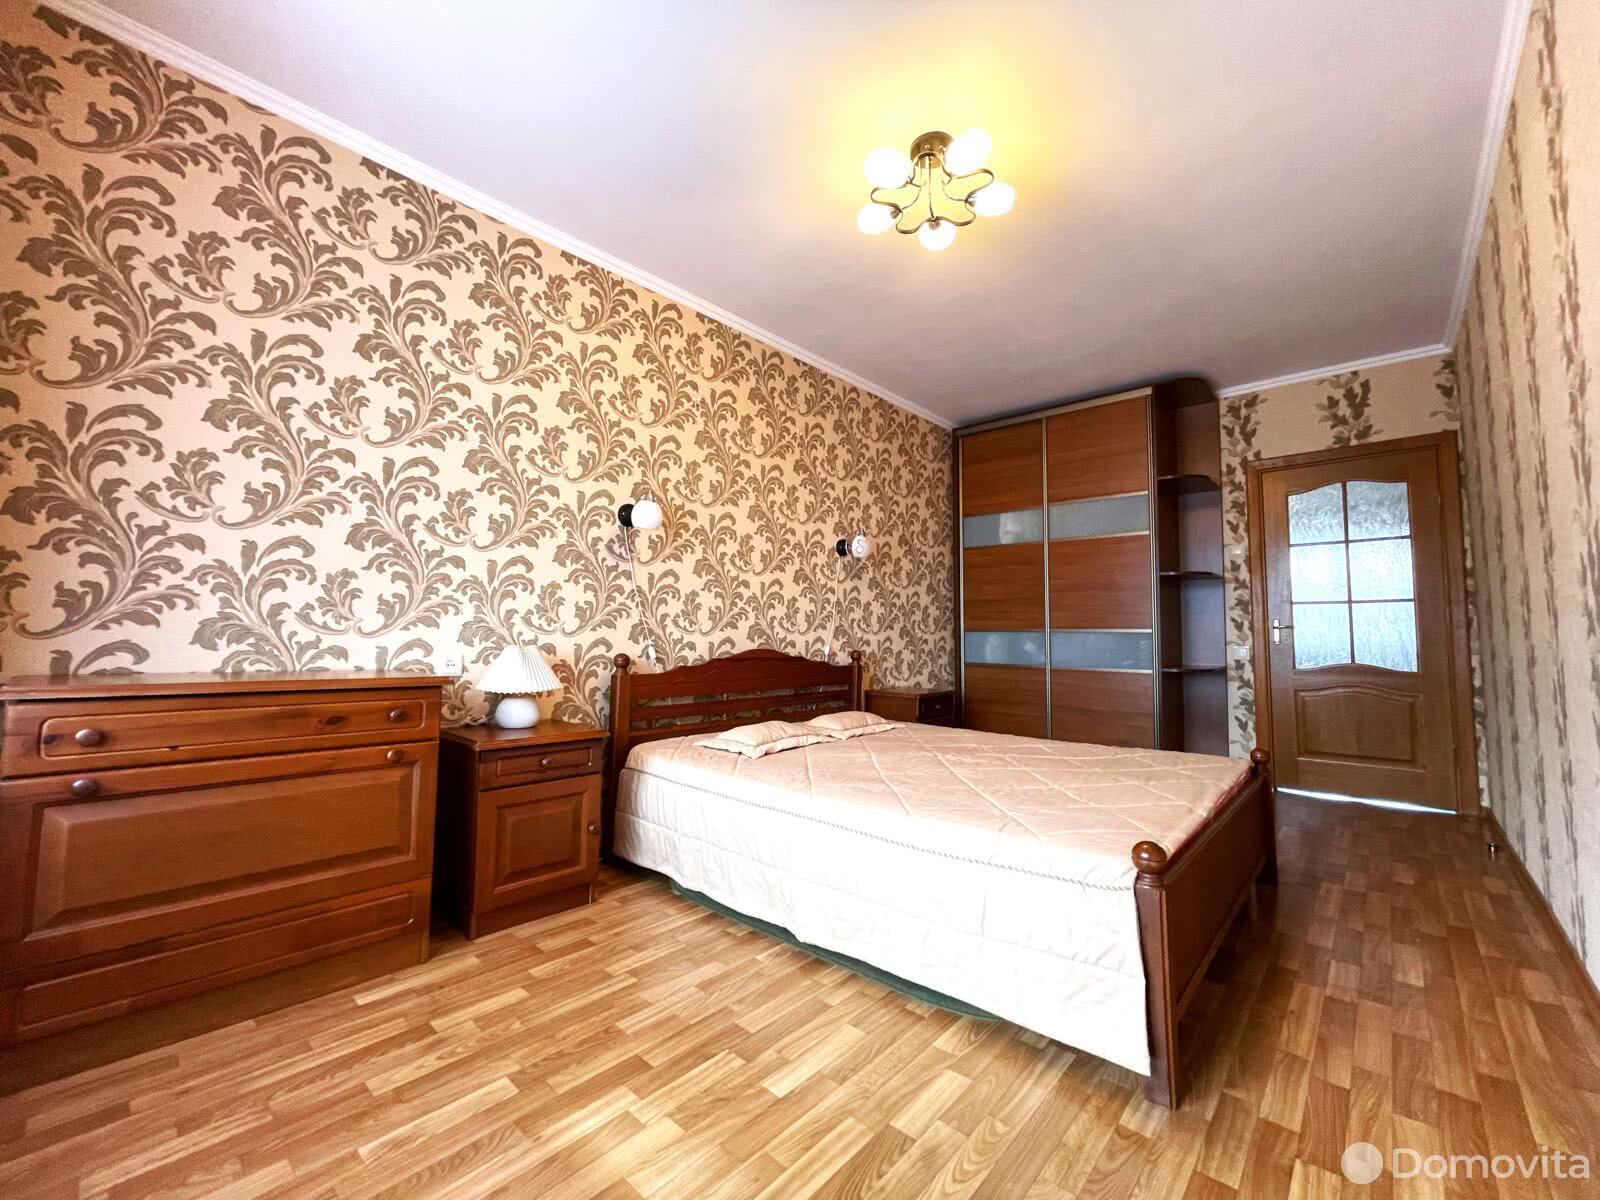 квартира, Борисов, ул. Серебренникова, д. 38, стоимость продажи 176 560 р.